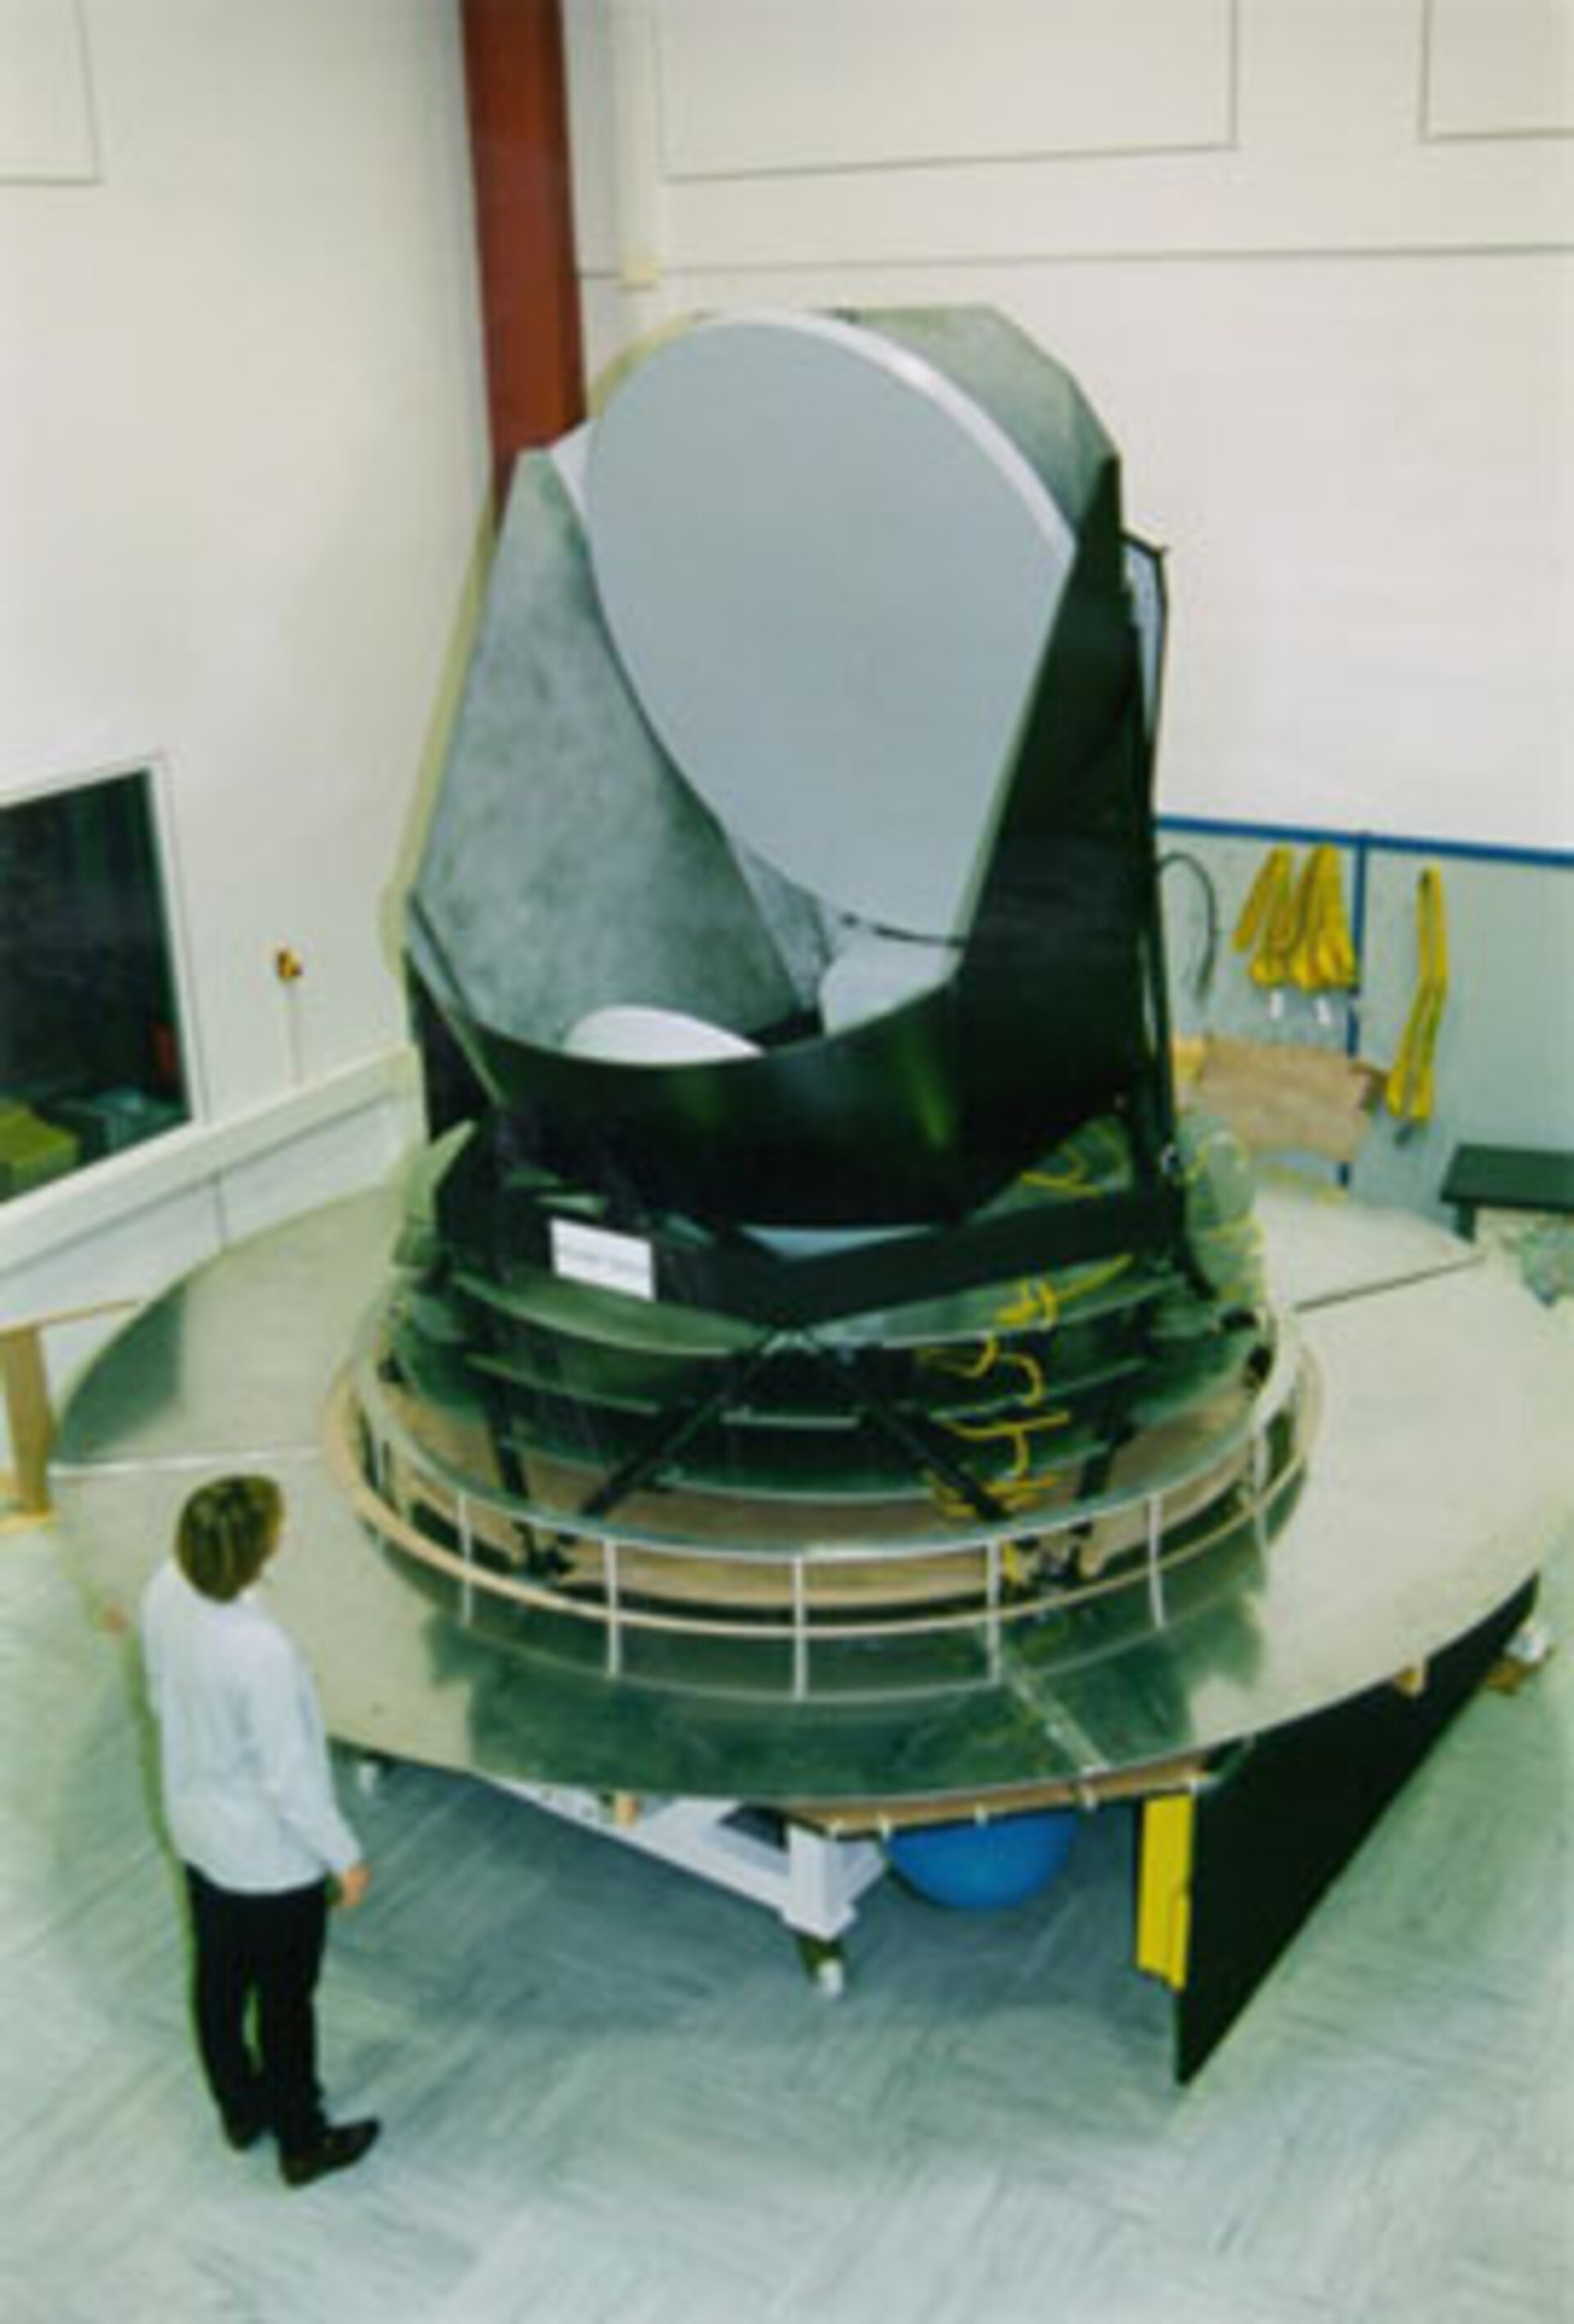 Planck's mirror, shields, service module, and solar array